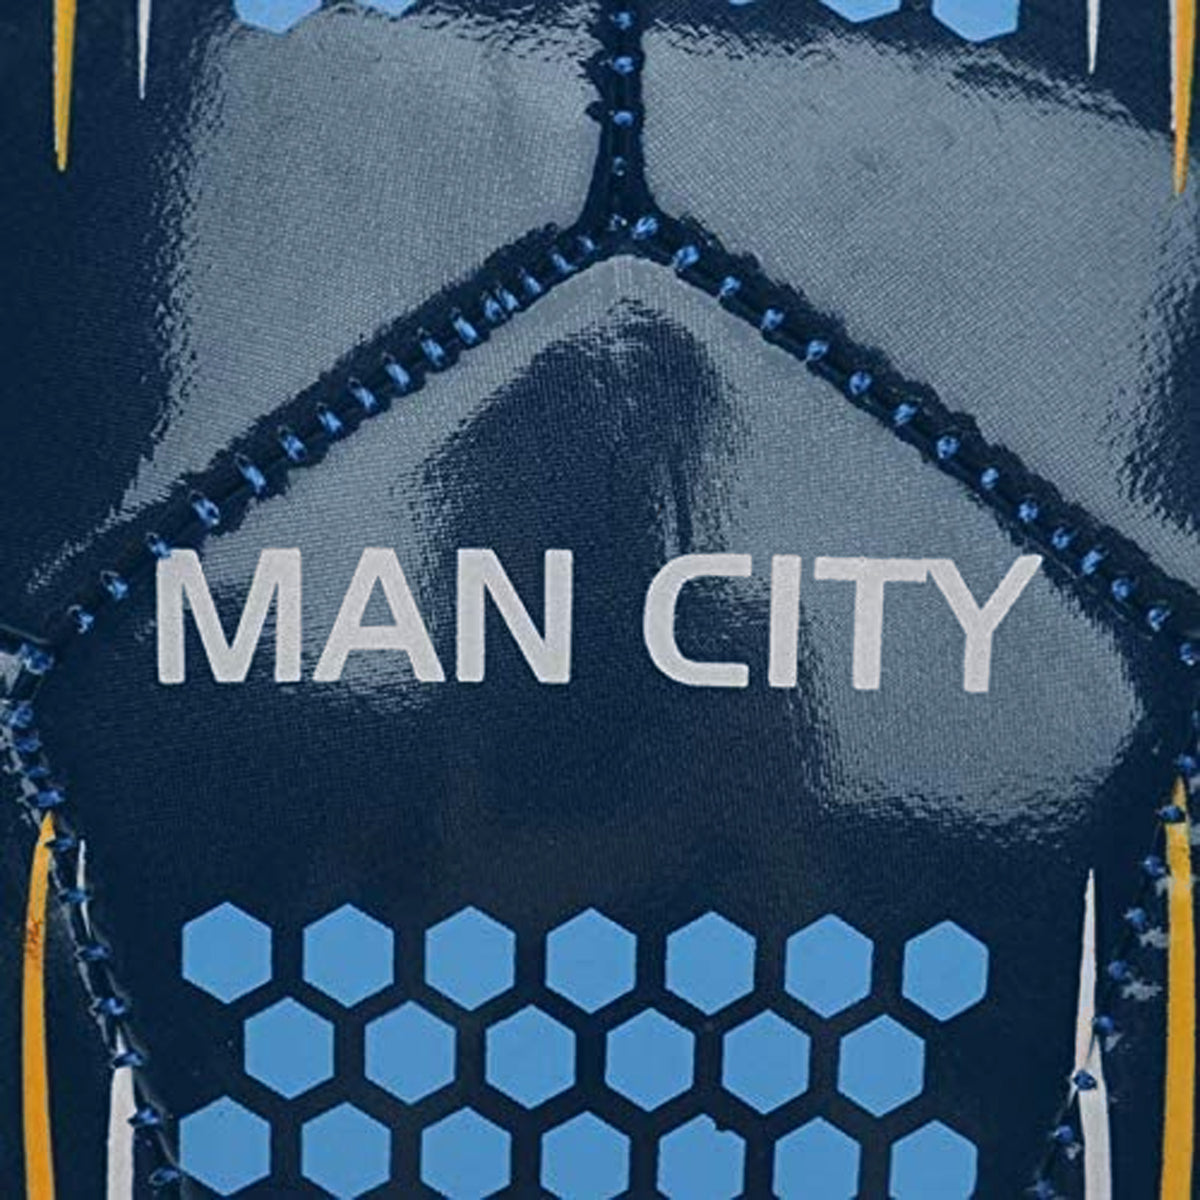 Manchester City FC Velocity Size 5 Football - Blue